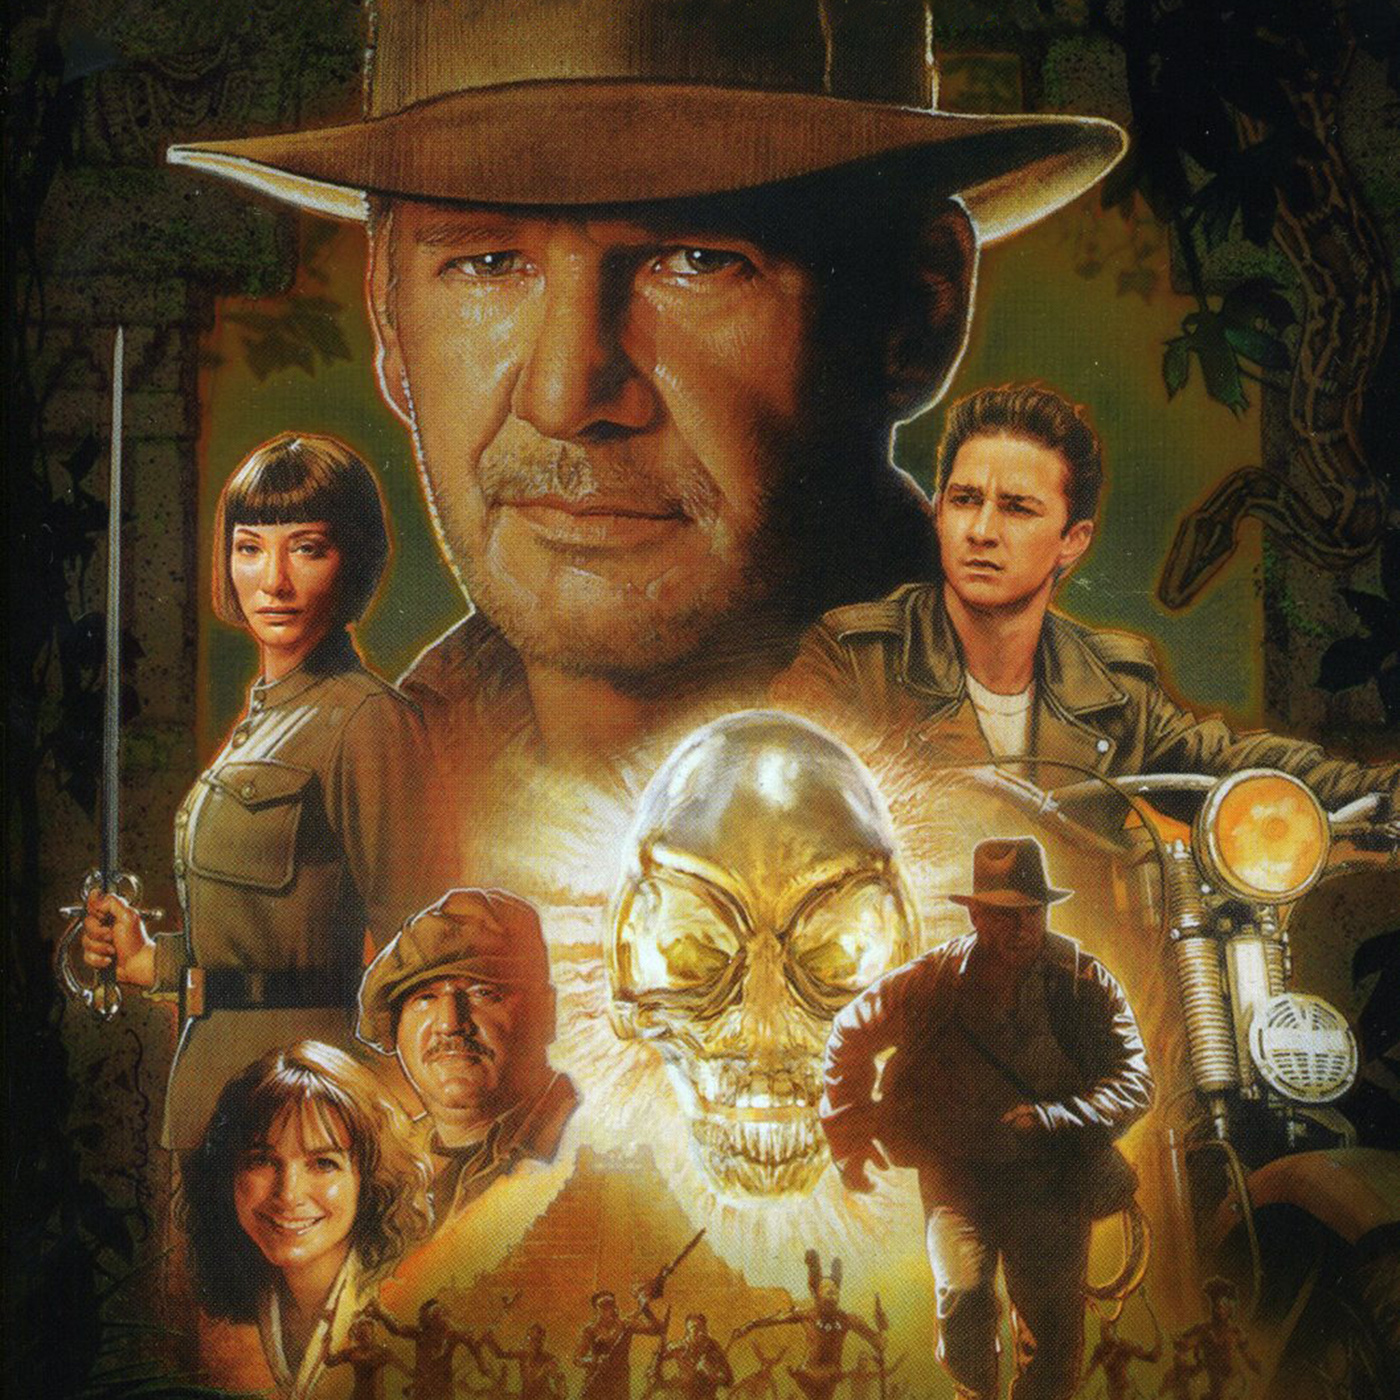 Indiana Jones and The Kingdom of the Crystal Skull(W/Chad Hopkins)